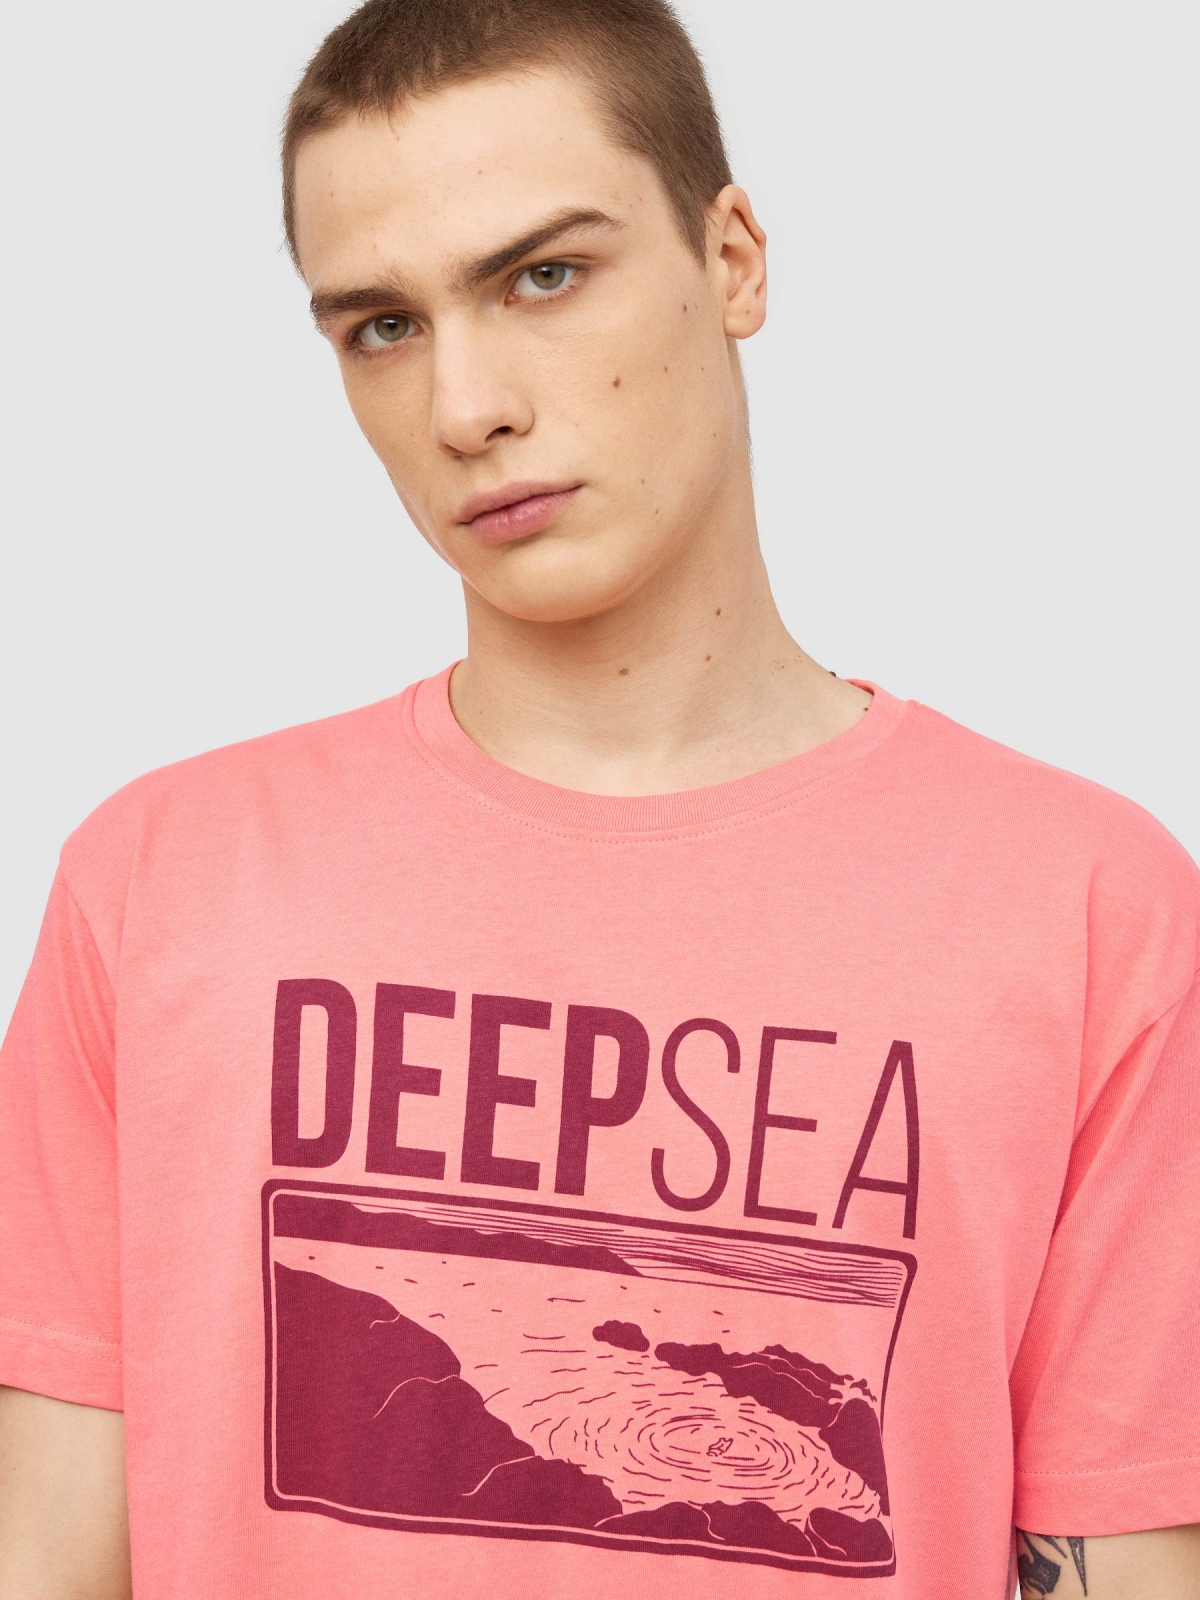 Deep Sea t-shirt pink detail view